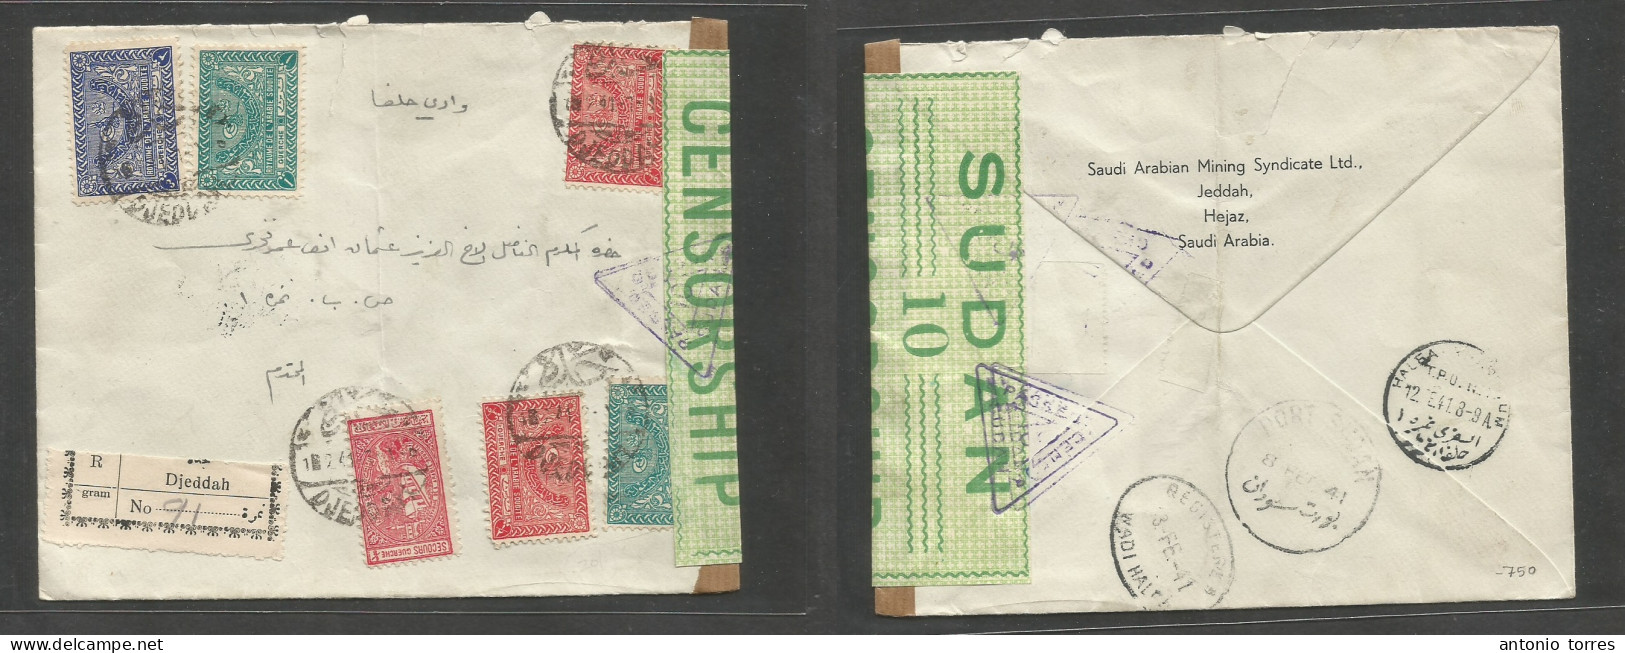 Saudi Arabia. 1941 (18 Febr) Djeddah - SUDAN, Wadi Halfa (13 Feb) Via Port Sudan, TPO Sudan. Reverse Cds. Registered Mul - Saudi Arabia